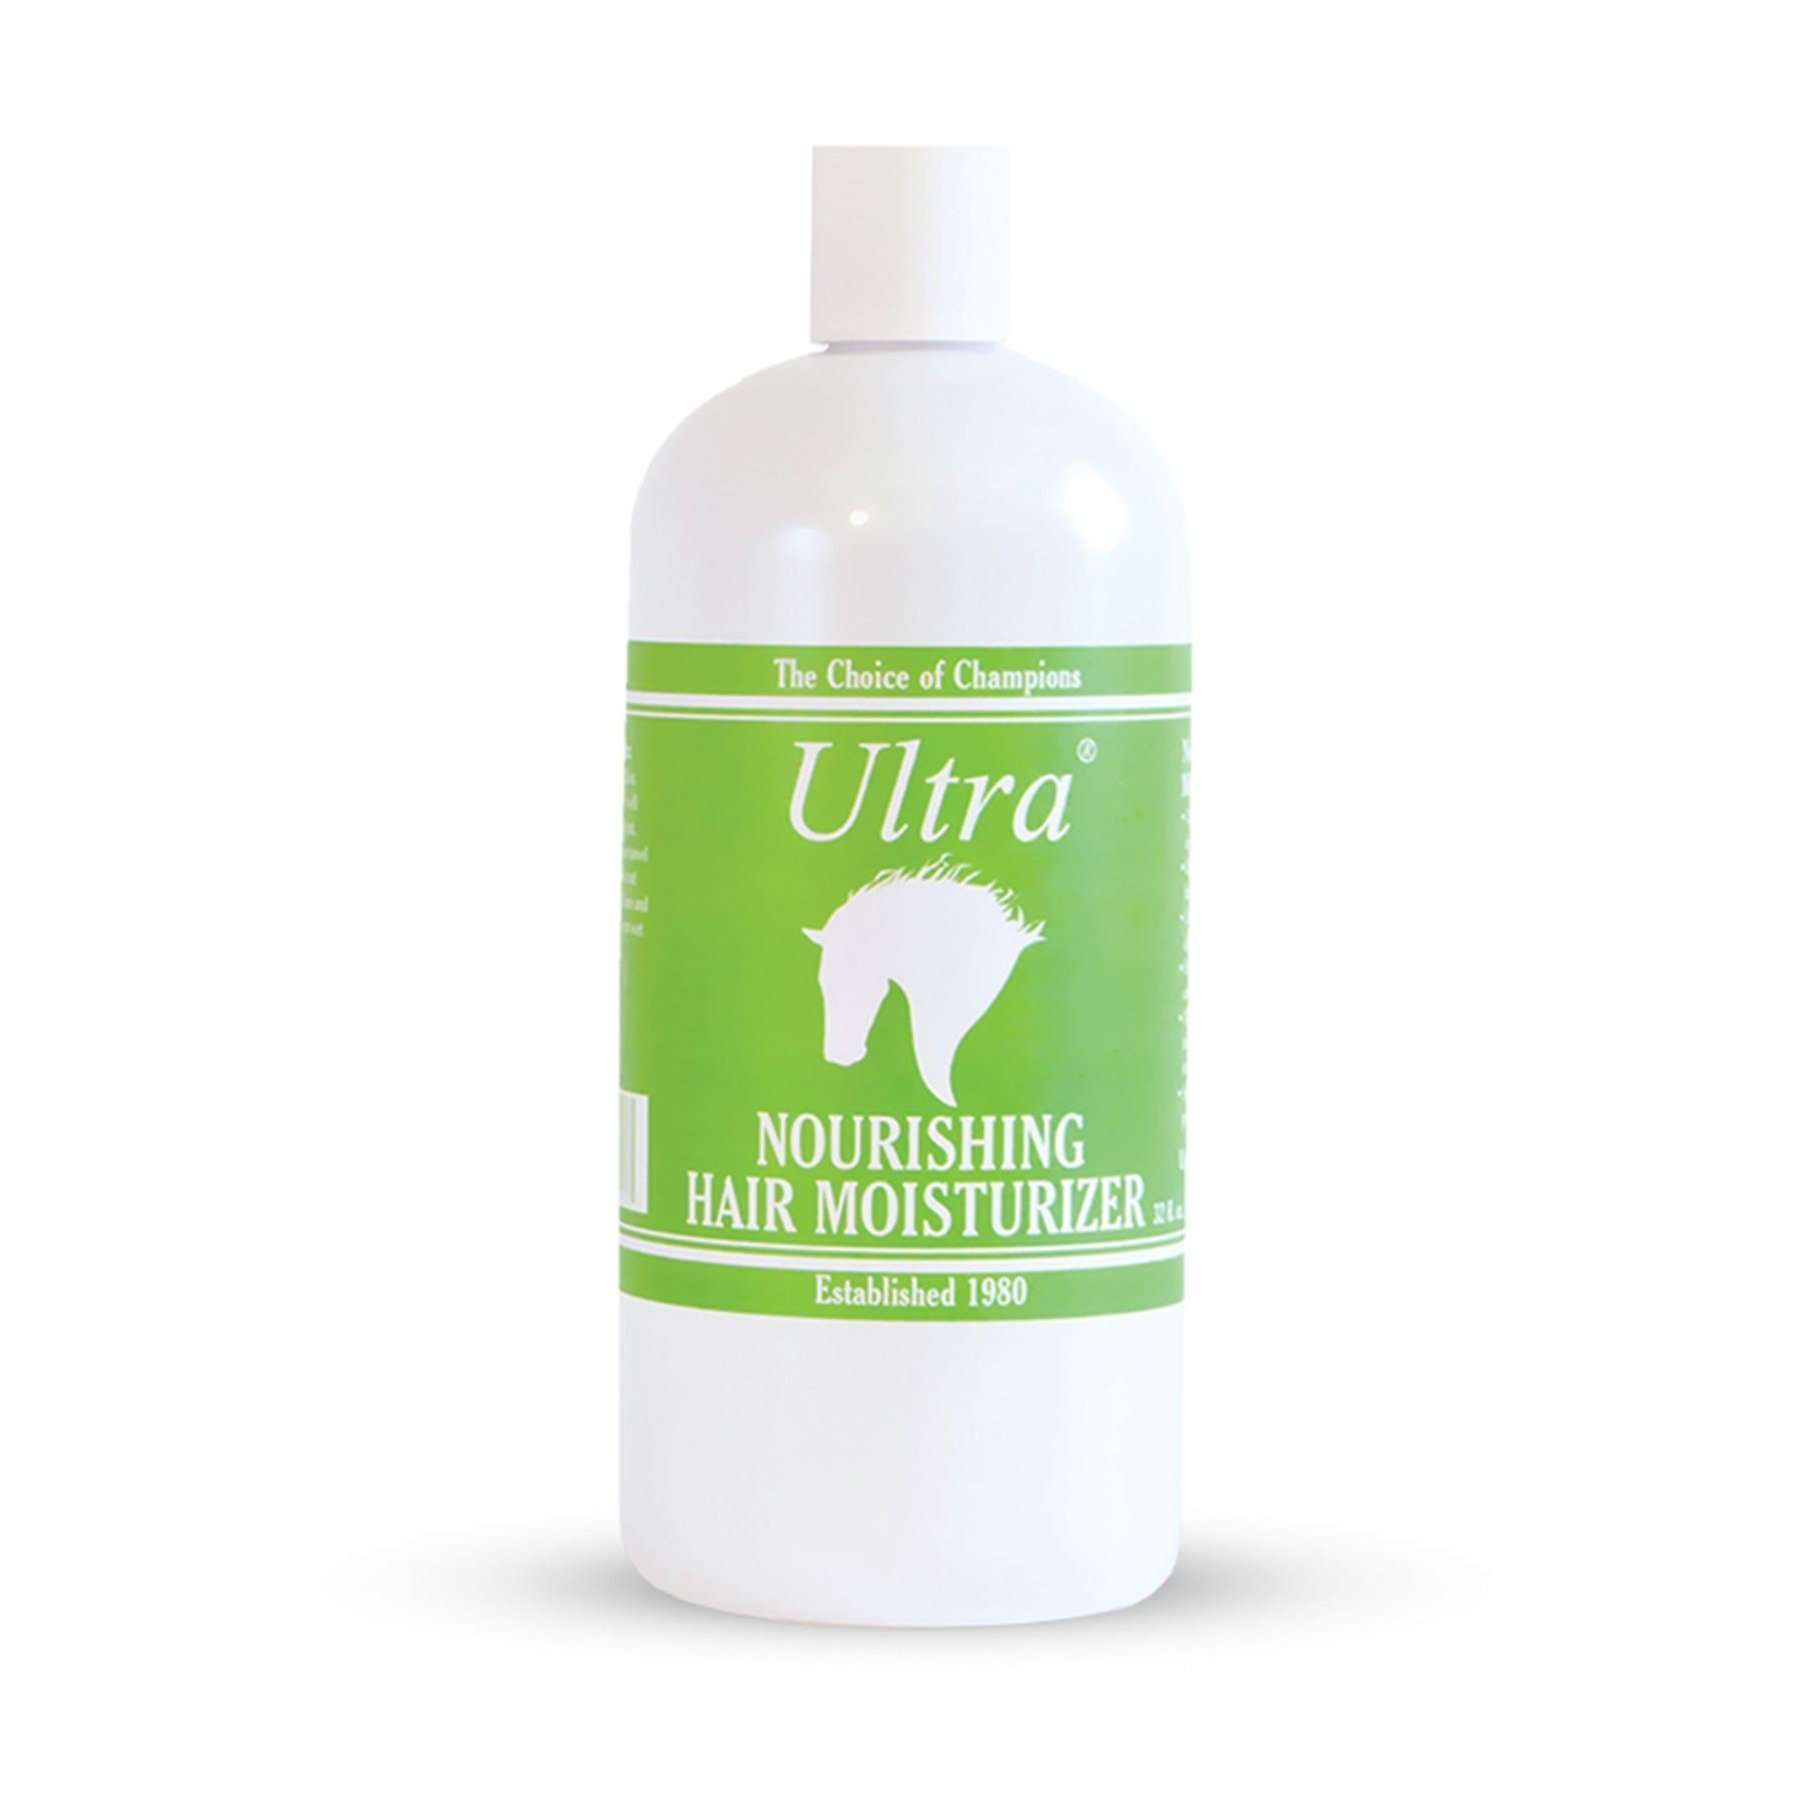 Ultra Nourishing Hair Moisurizer